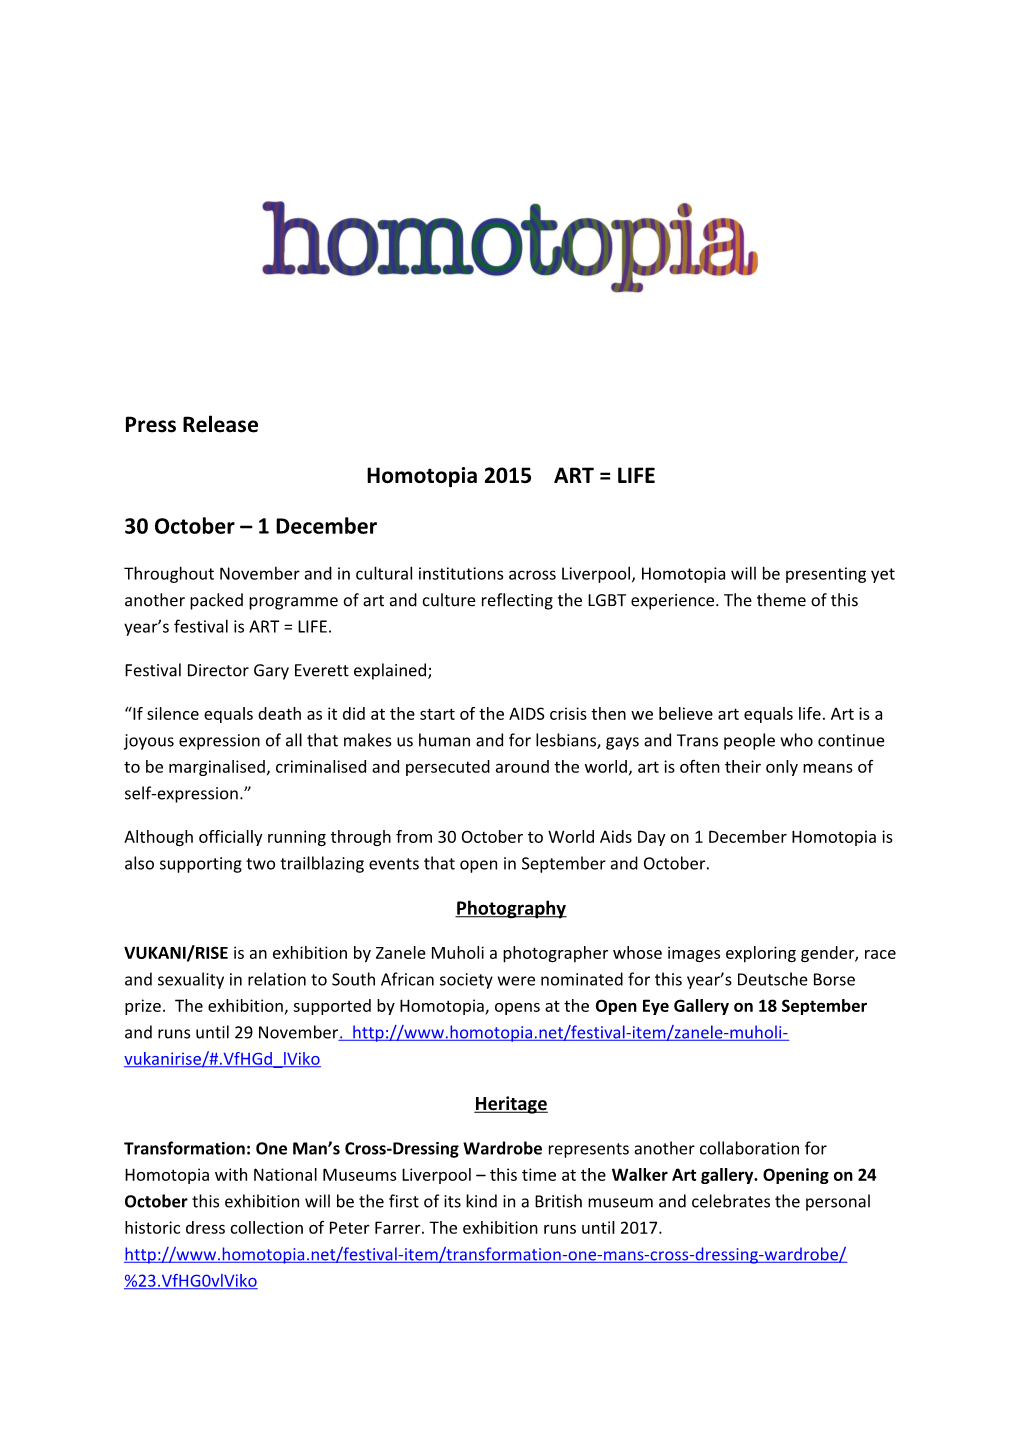 Homotopia 2015 ART = LIFE